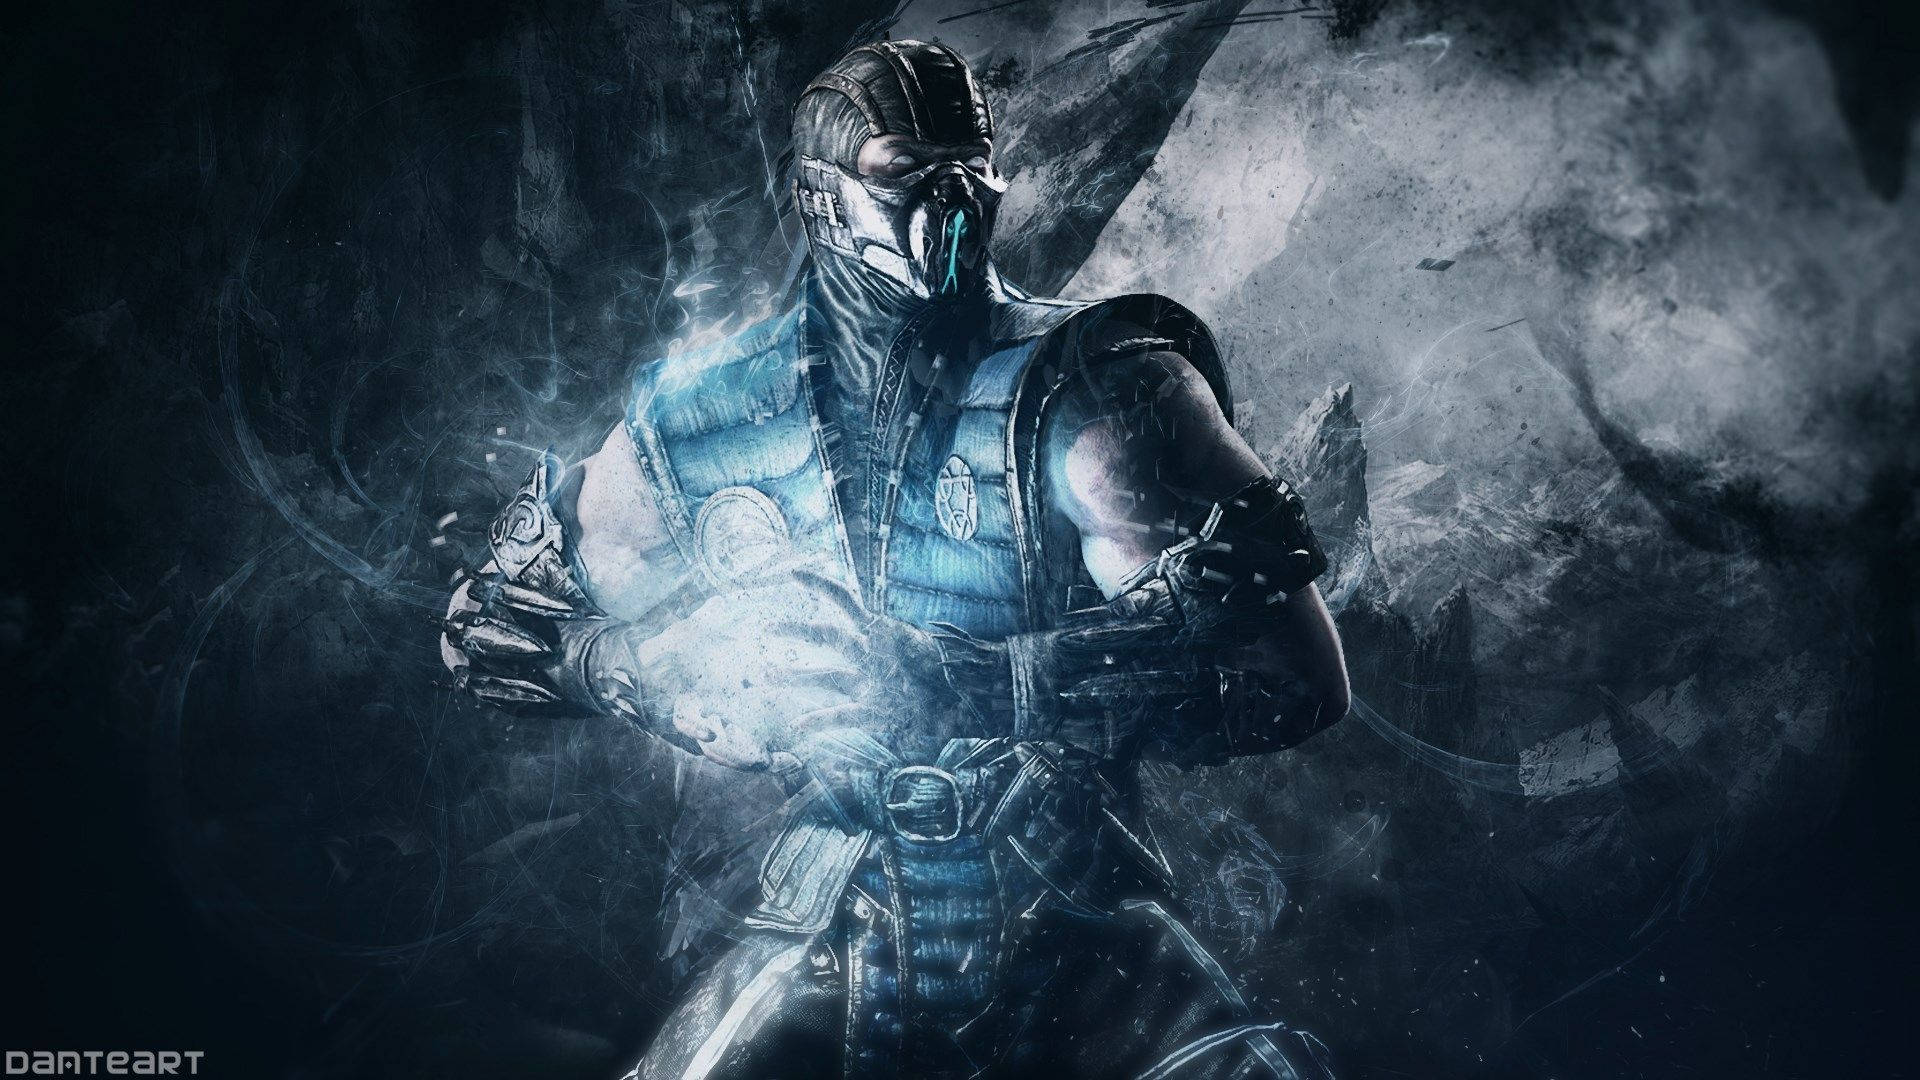 Sub-Zero Unleashing His Ice Powers in Mortal Kombat Wallpaper